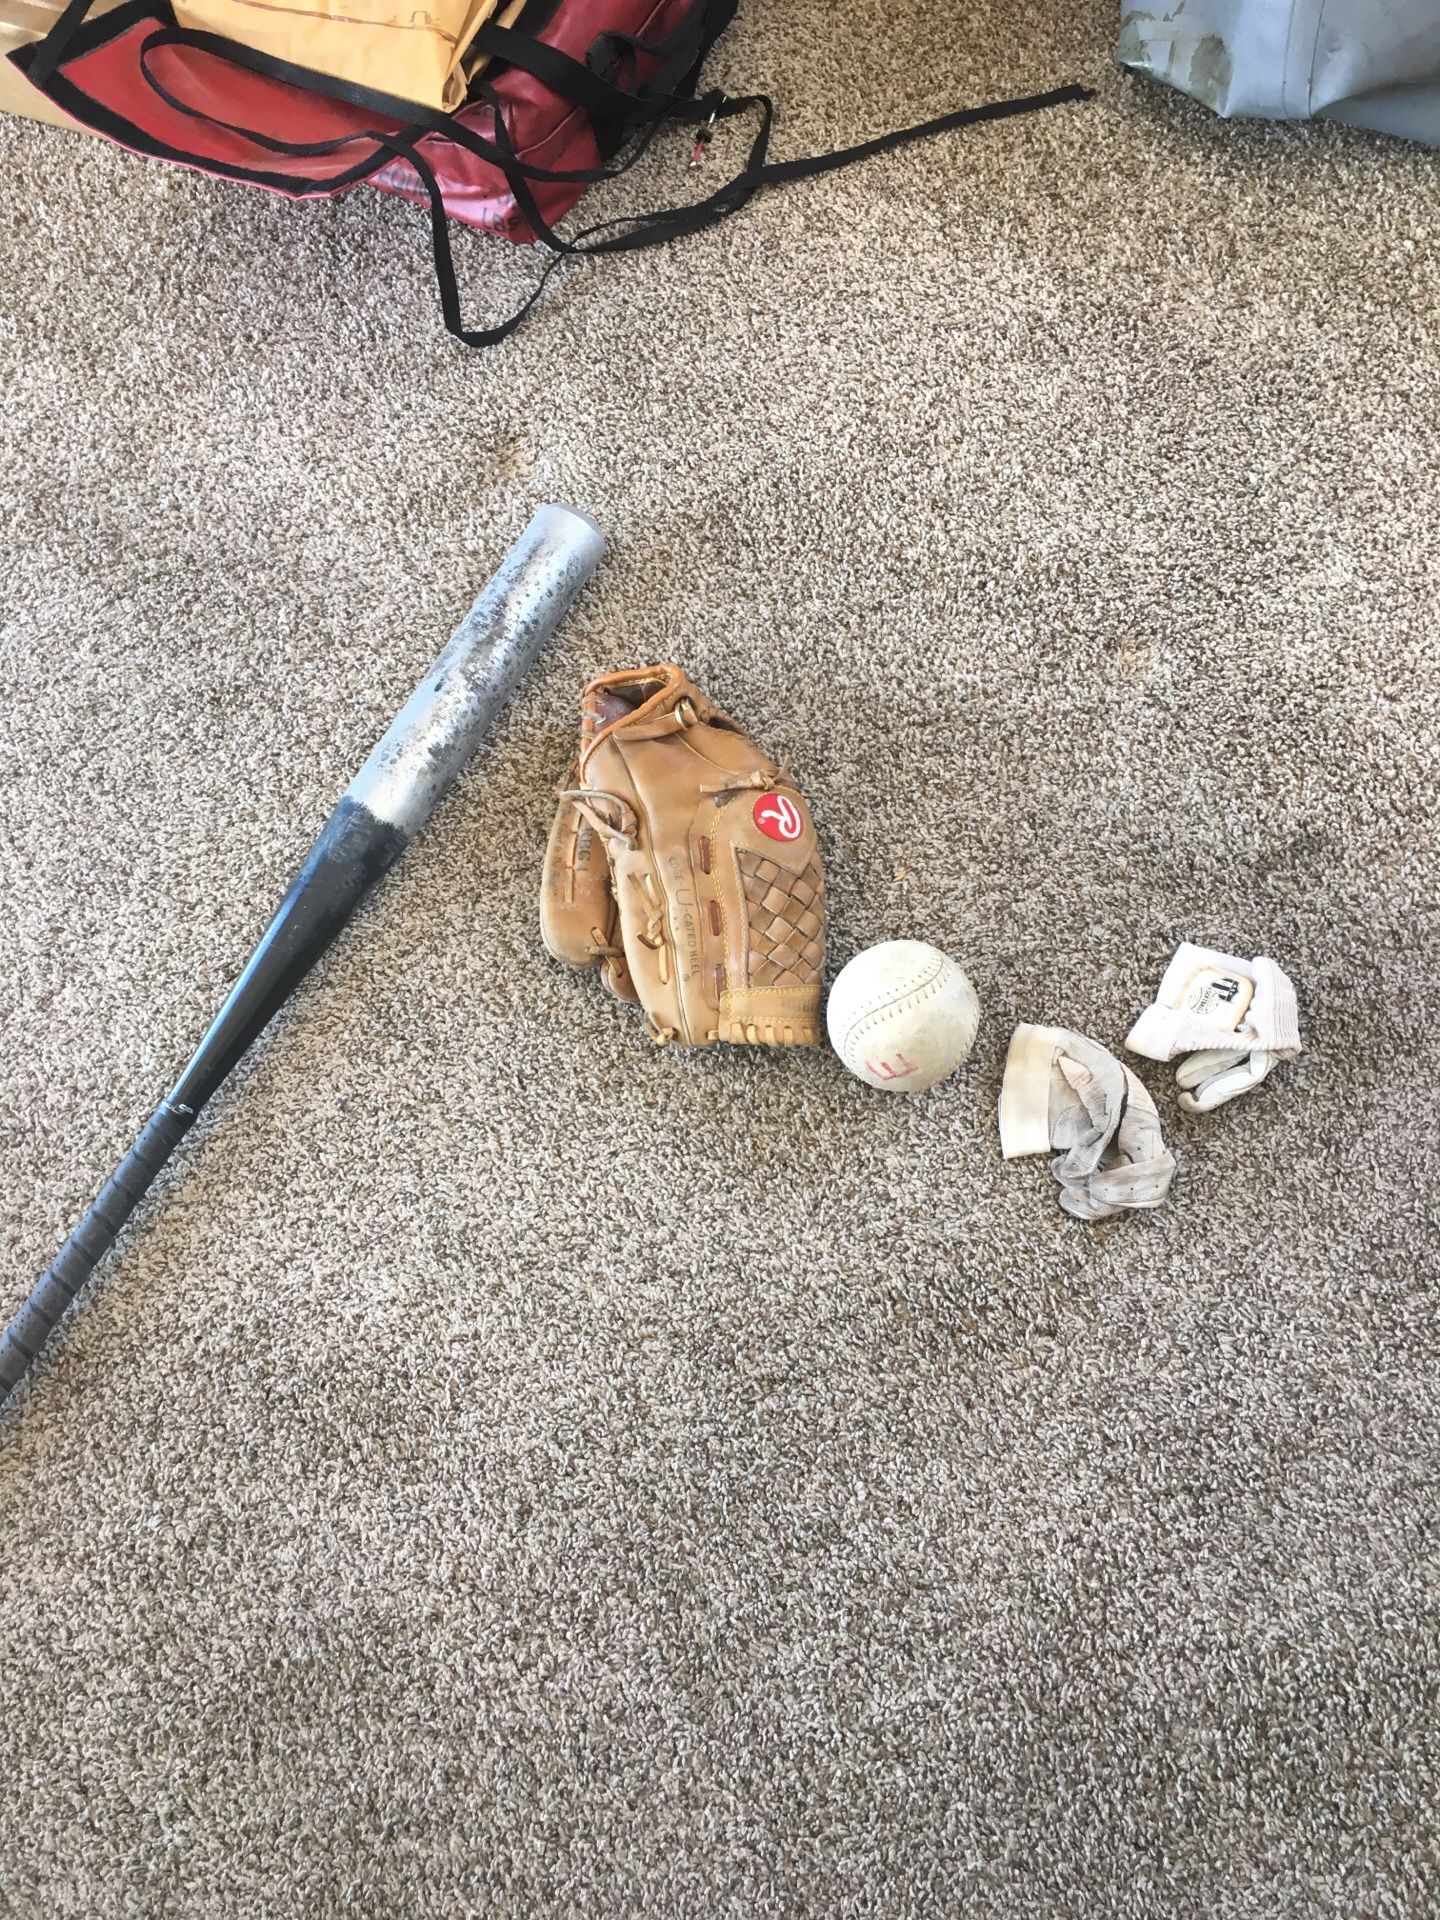 Softball bat glove and ball and gloves